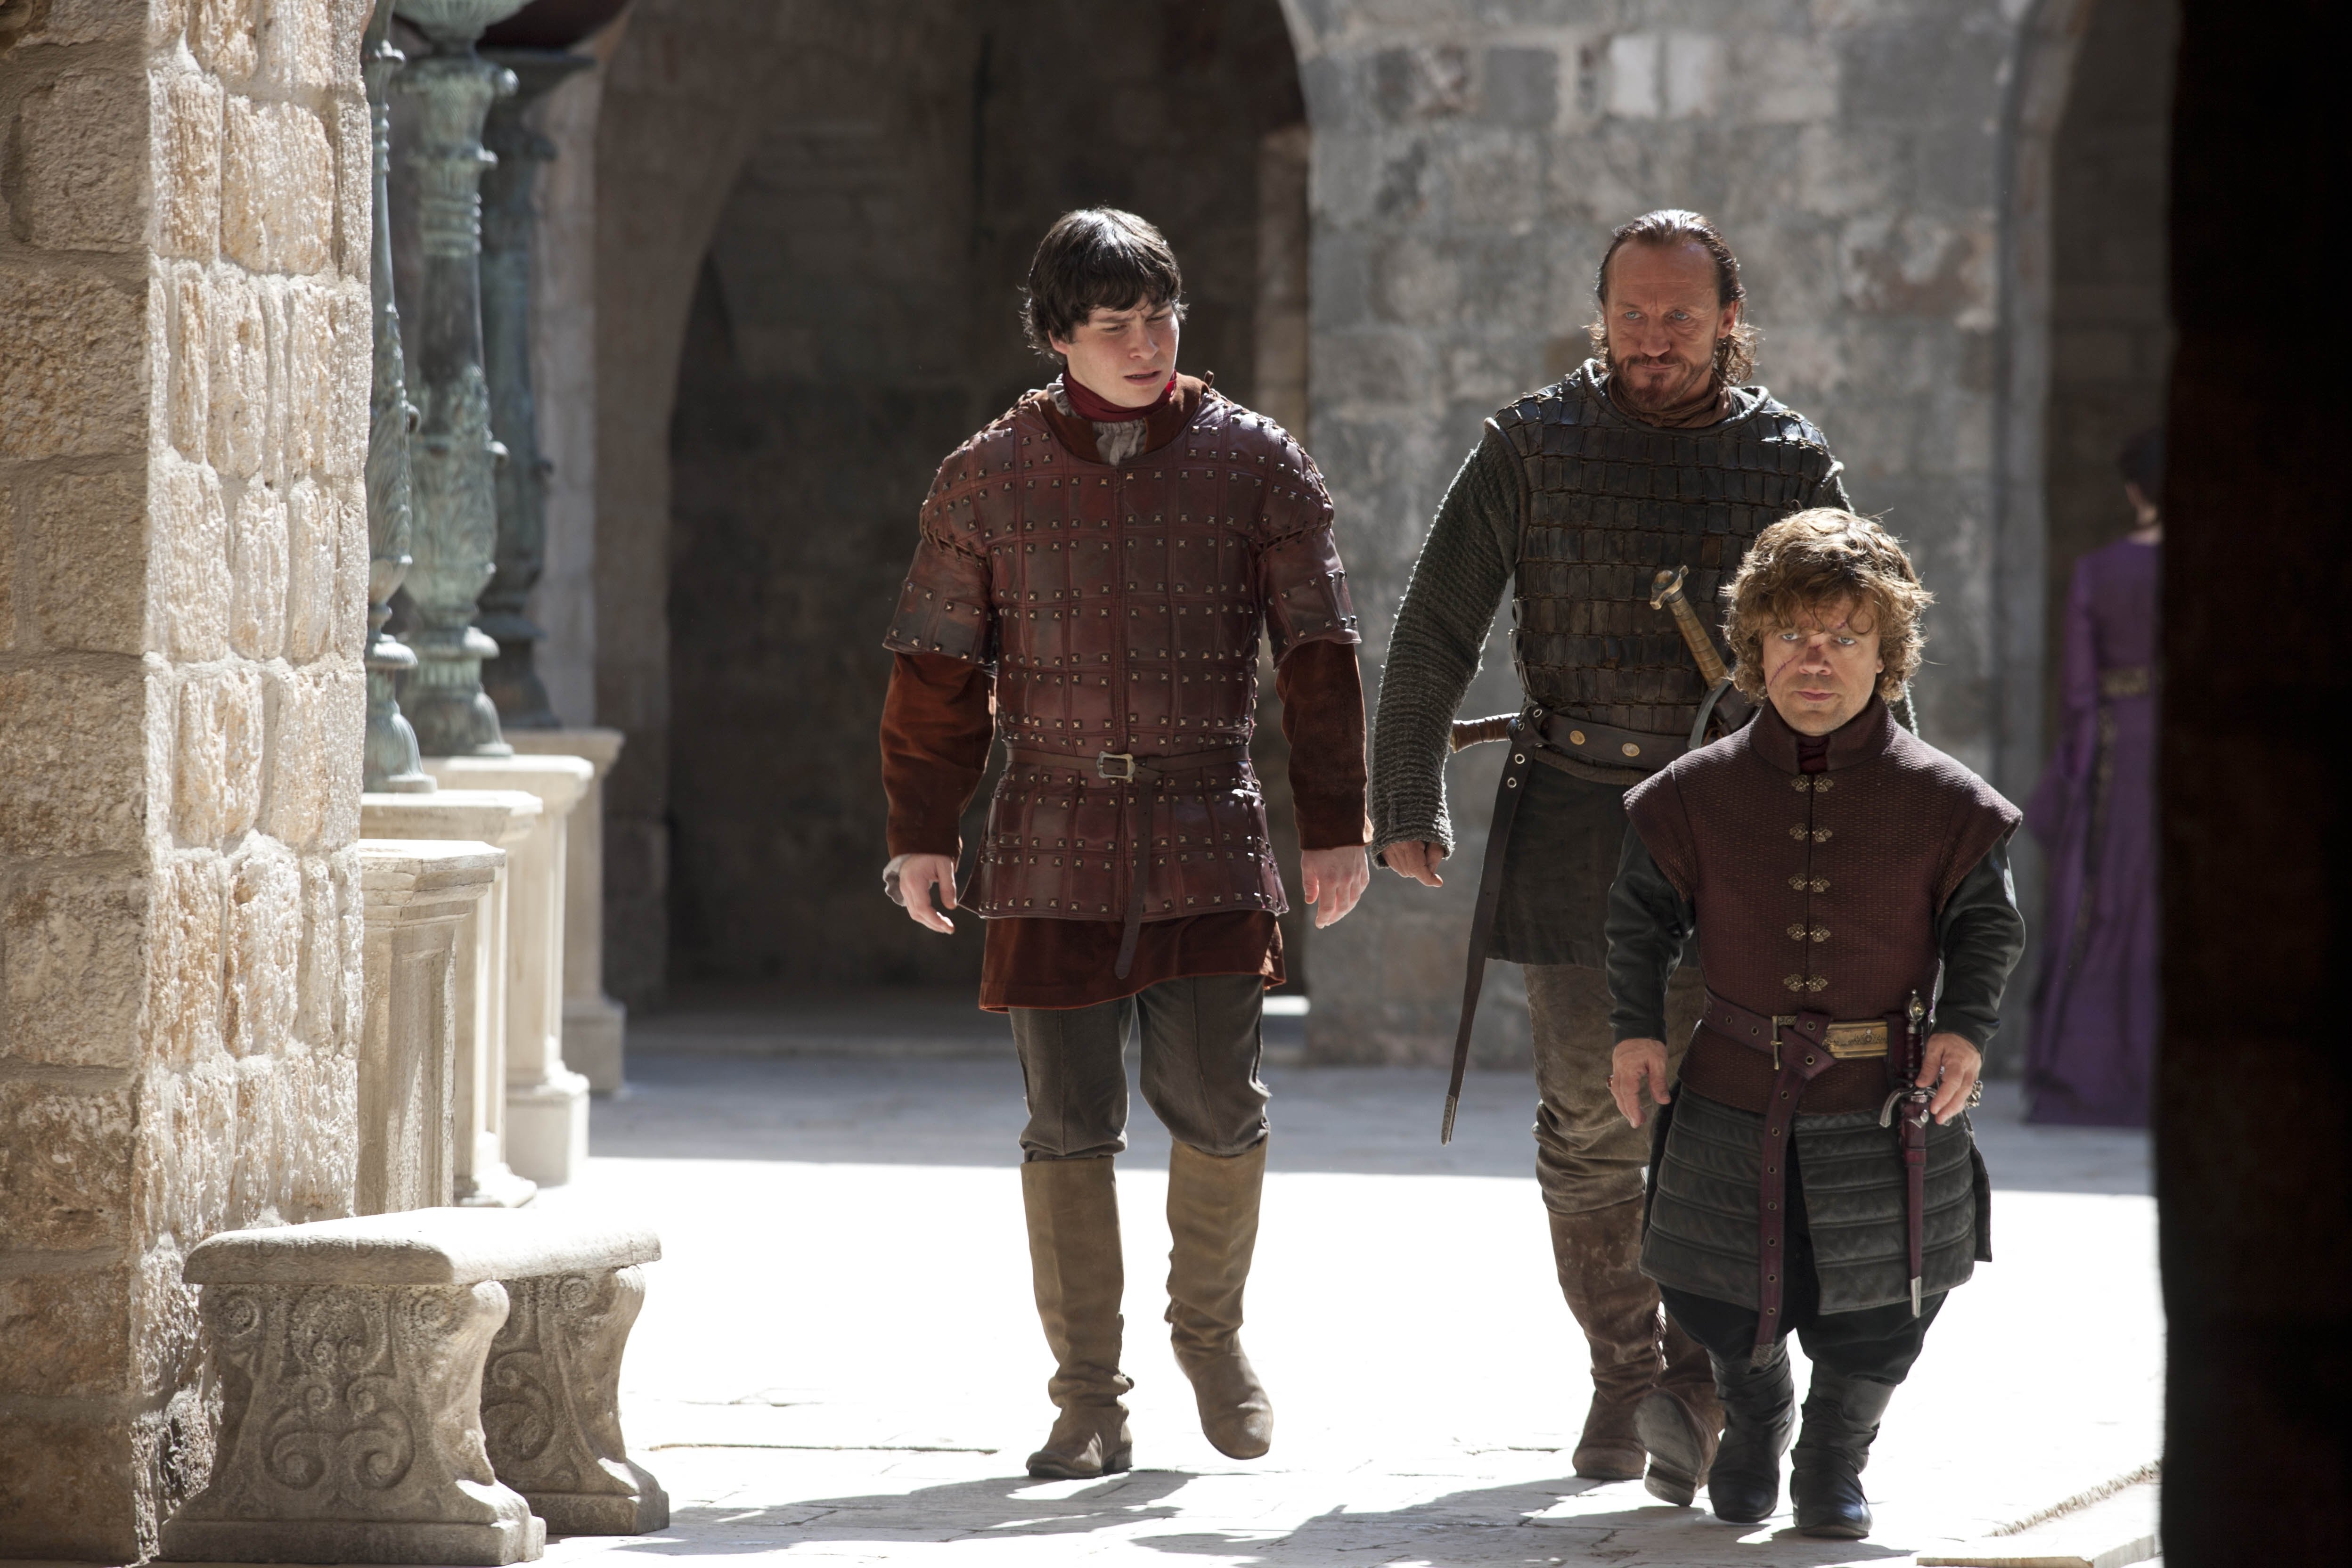 Bronn Game Of Thrones Daniel Portman Jerome Flynn Peter Dinklage Podrick Payne Tyrion Lannister 4992x3328